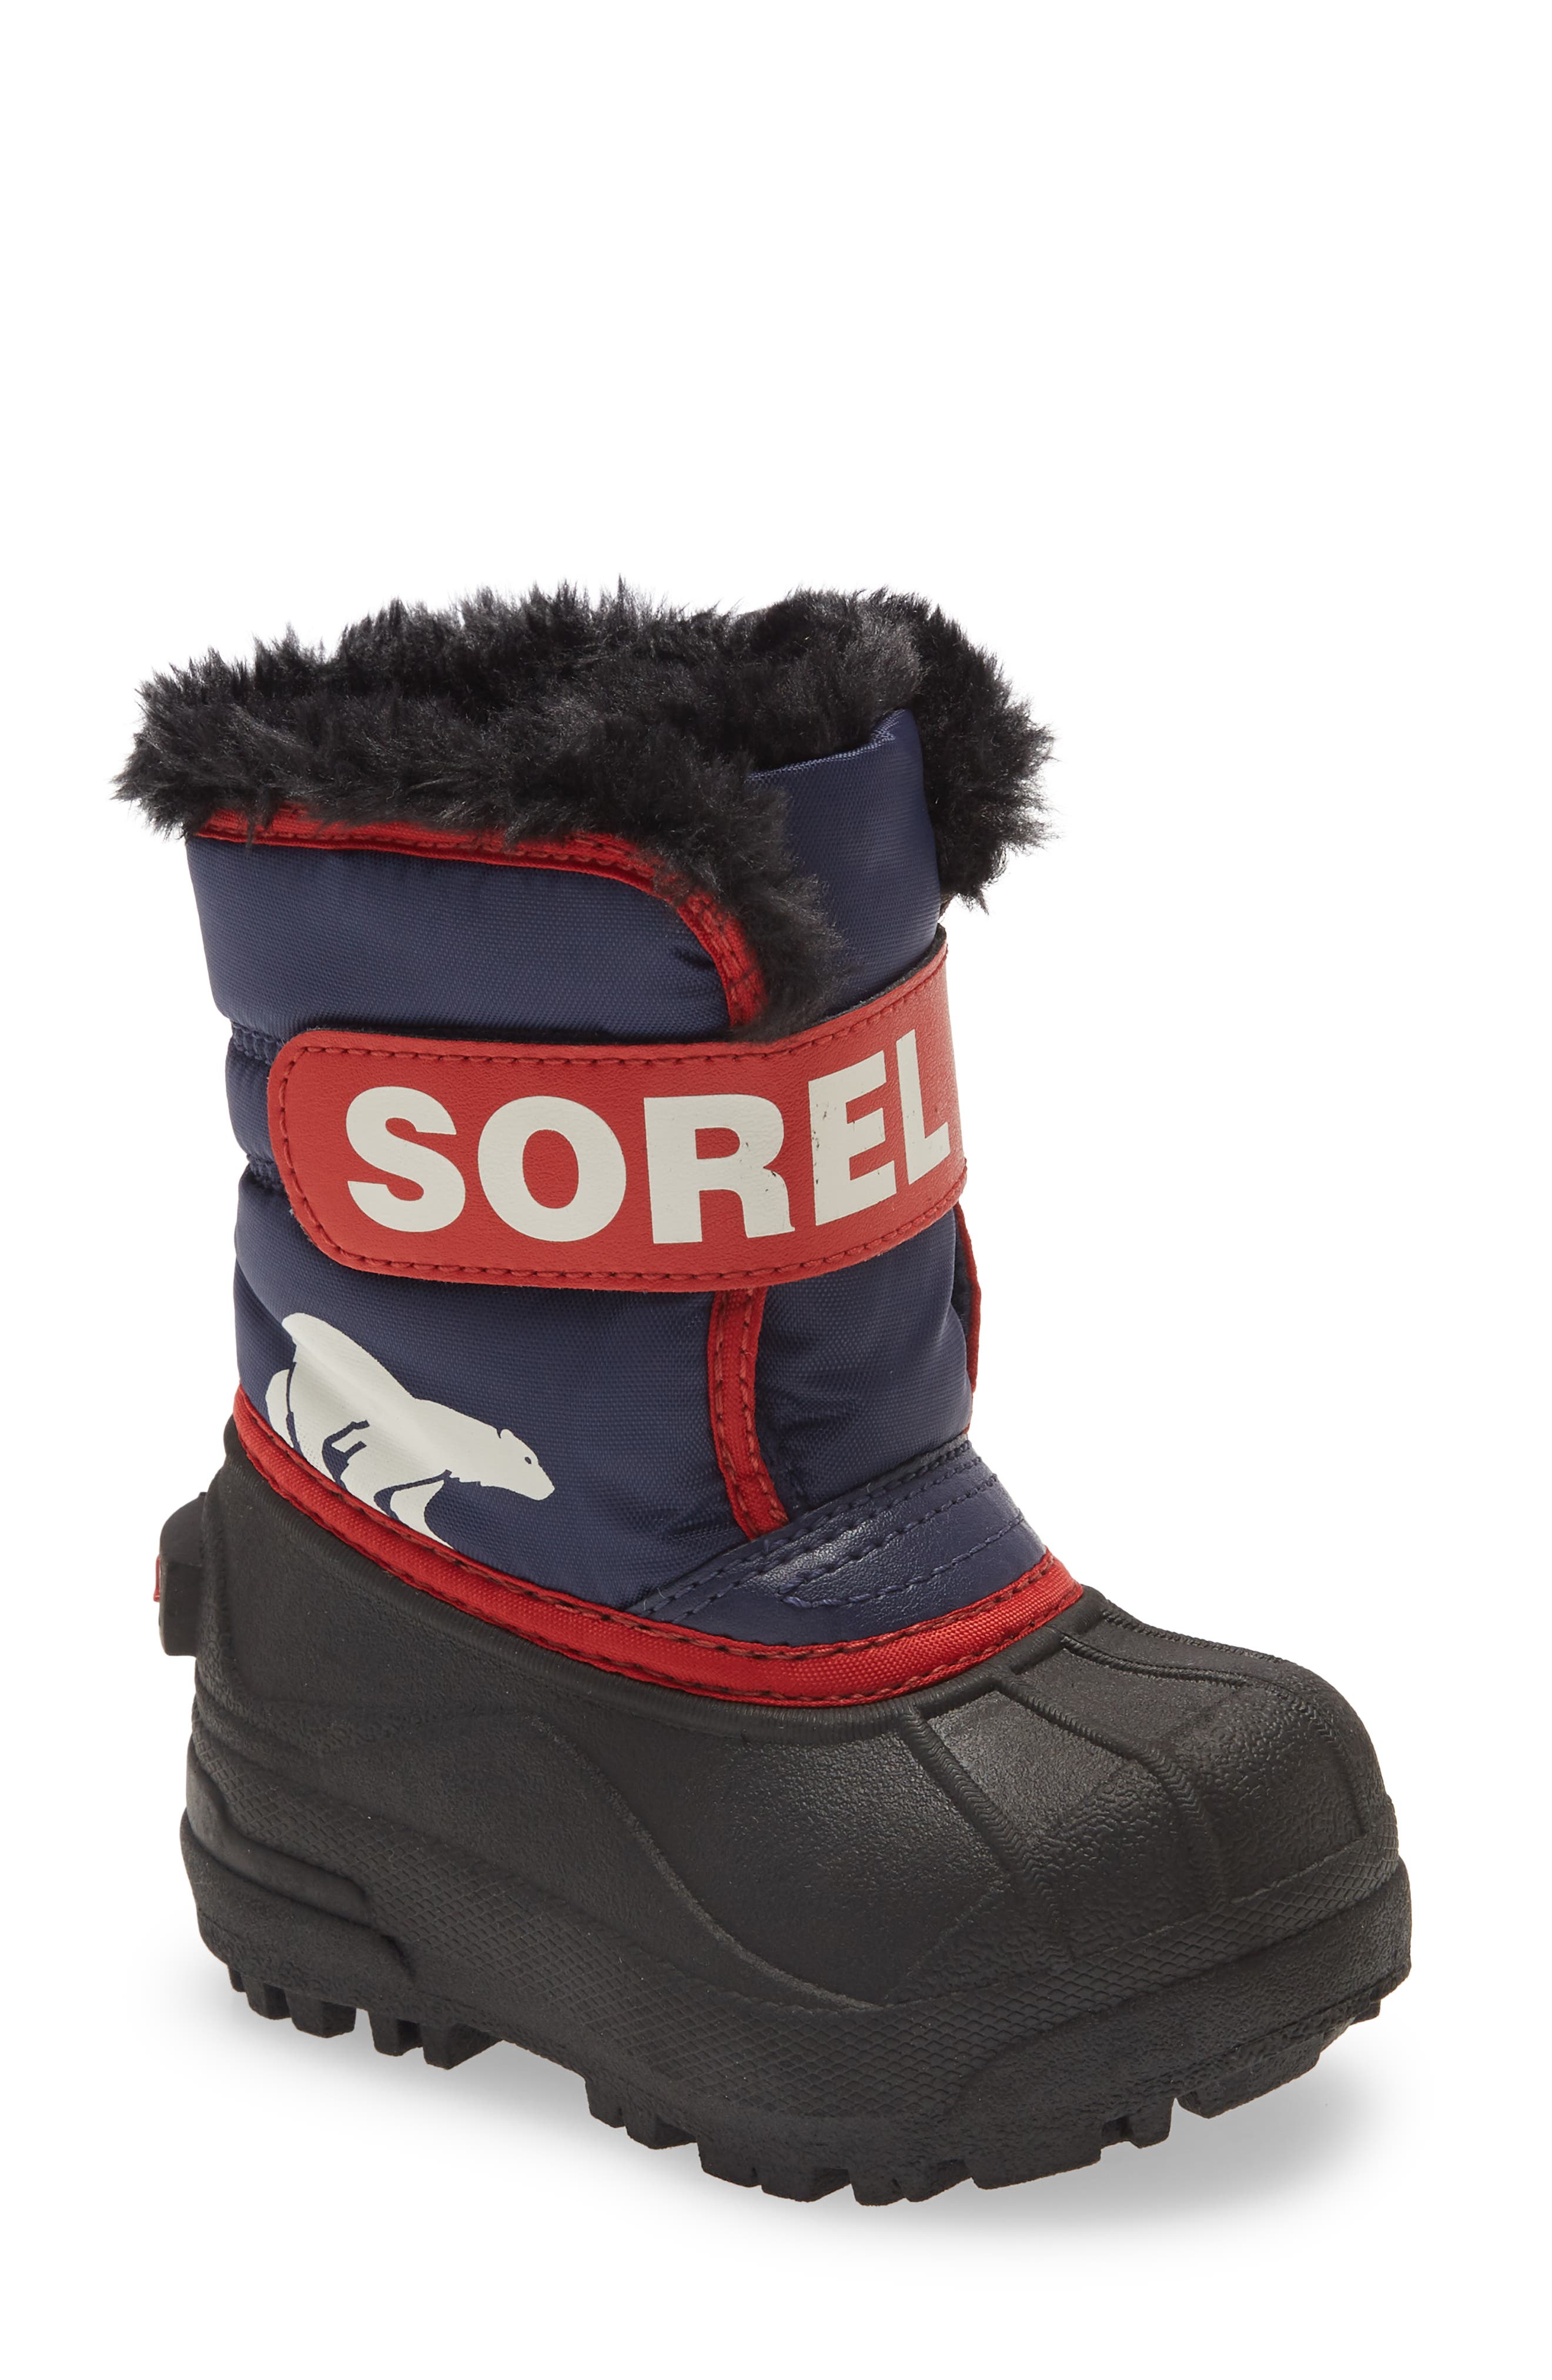 sorel girls boots